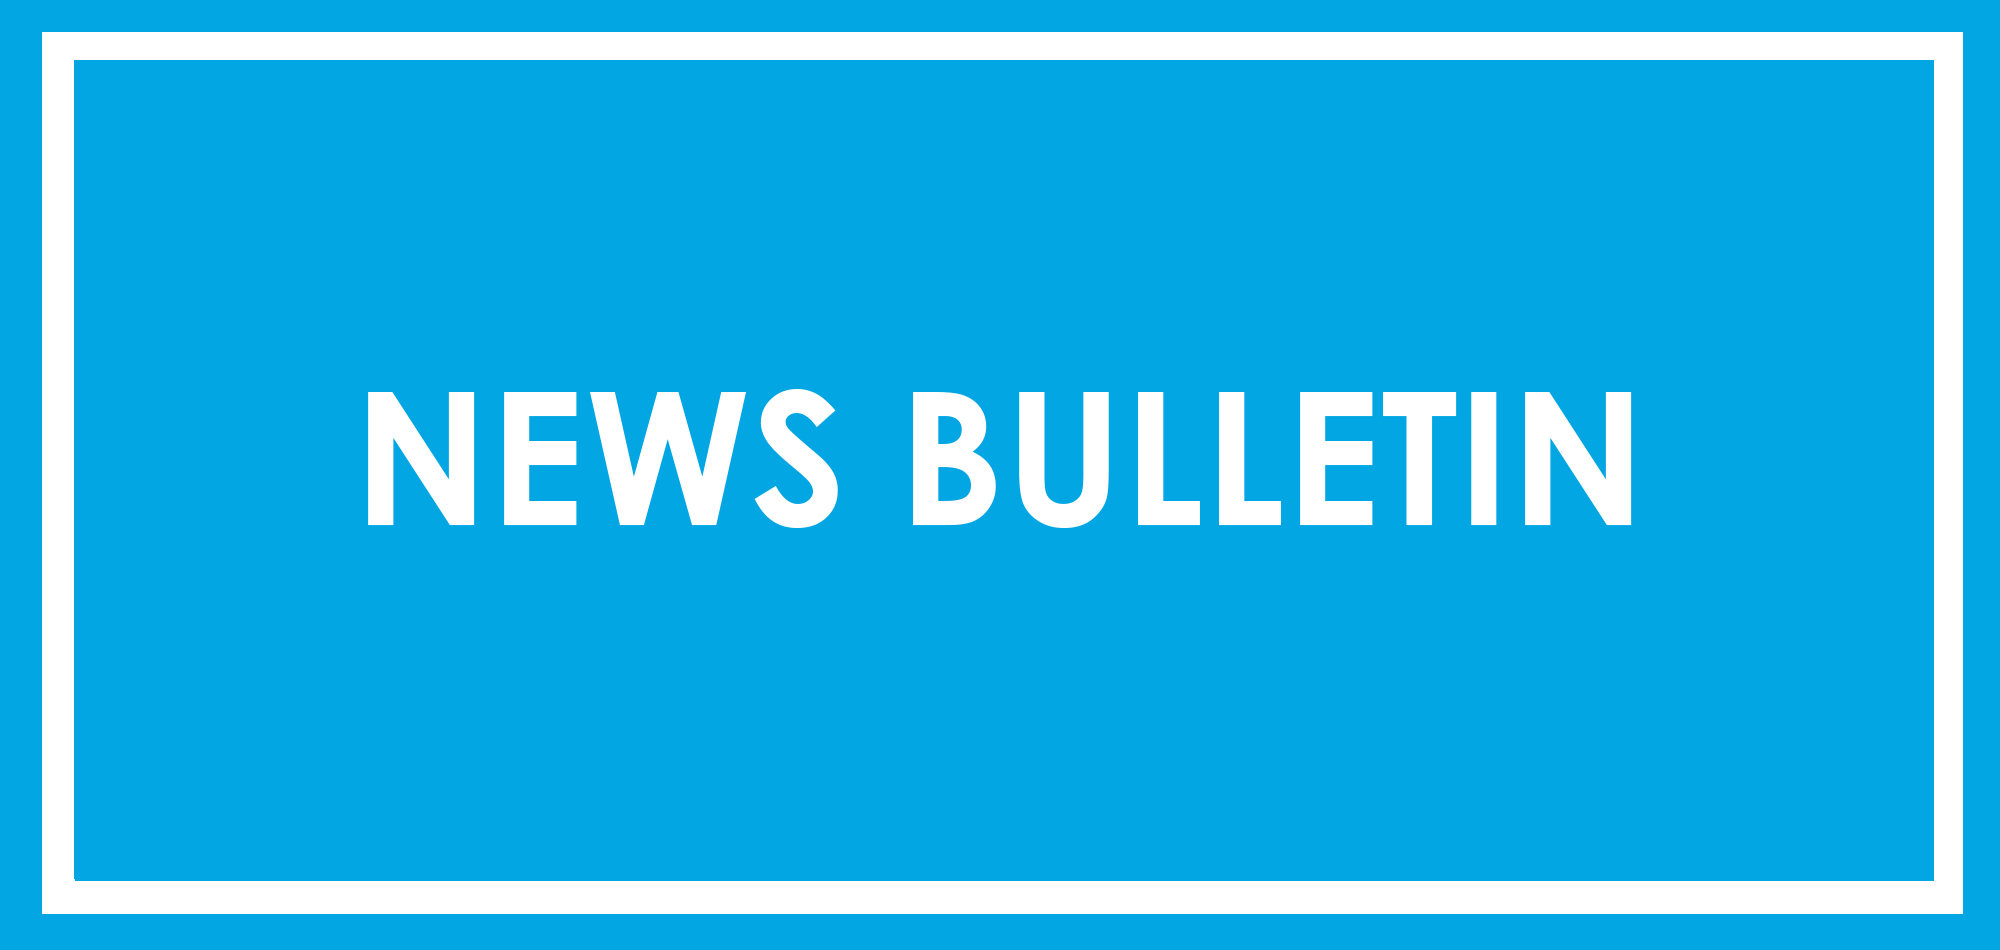 News Bulletin - 28.07.21